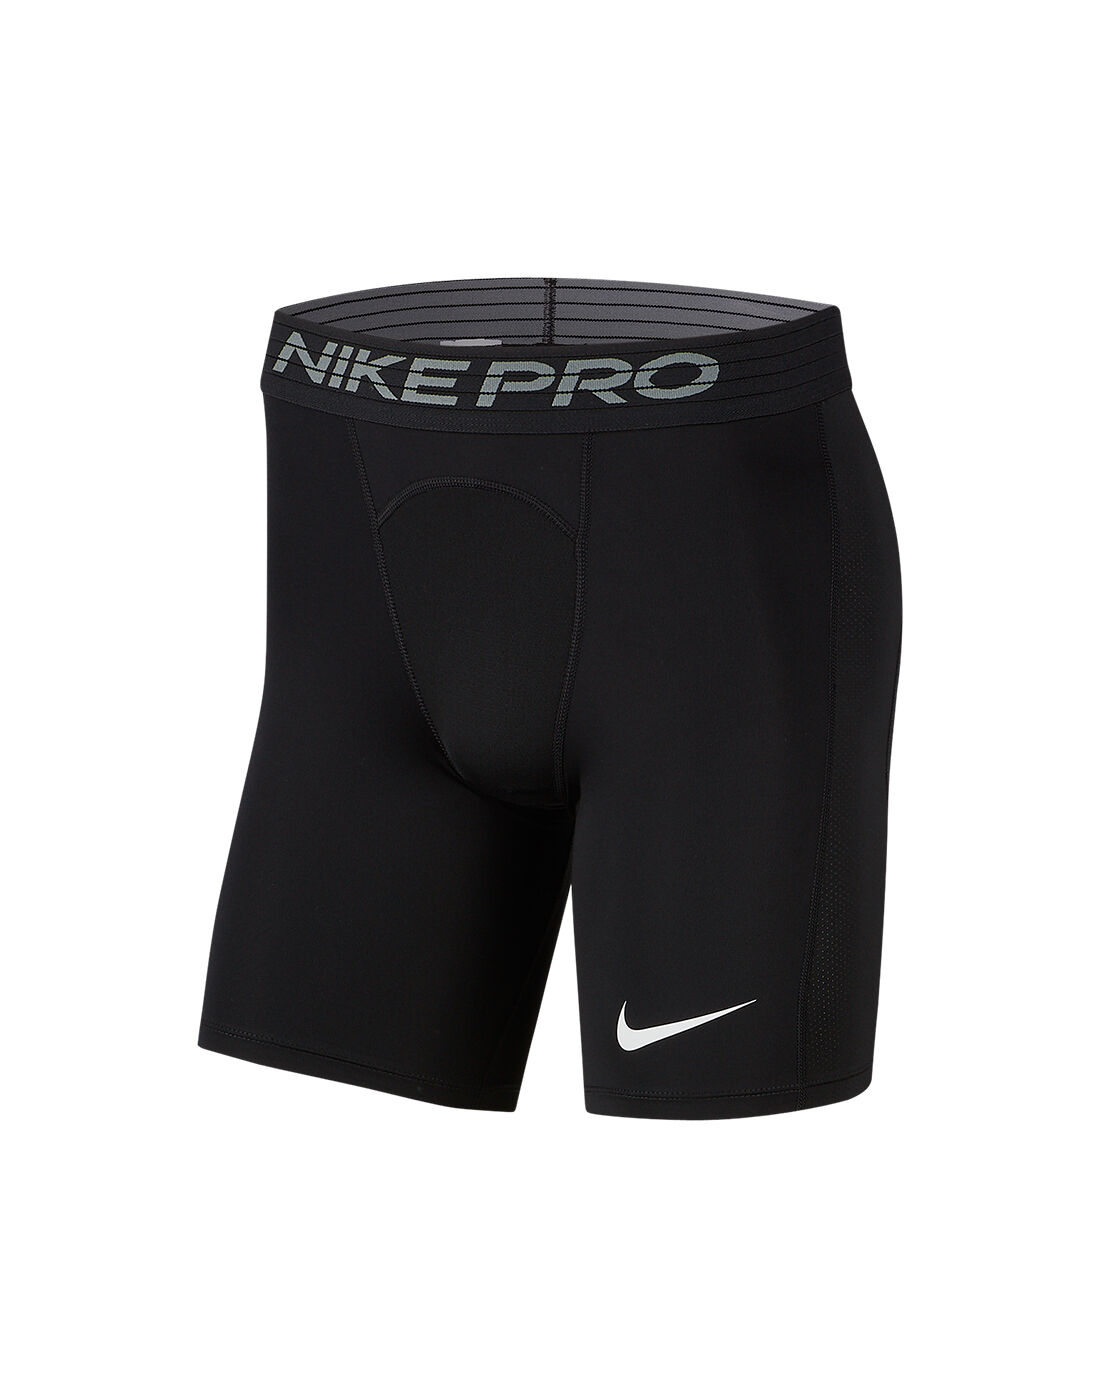 nike pro 7 inch compression shorts